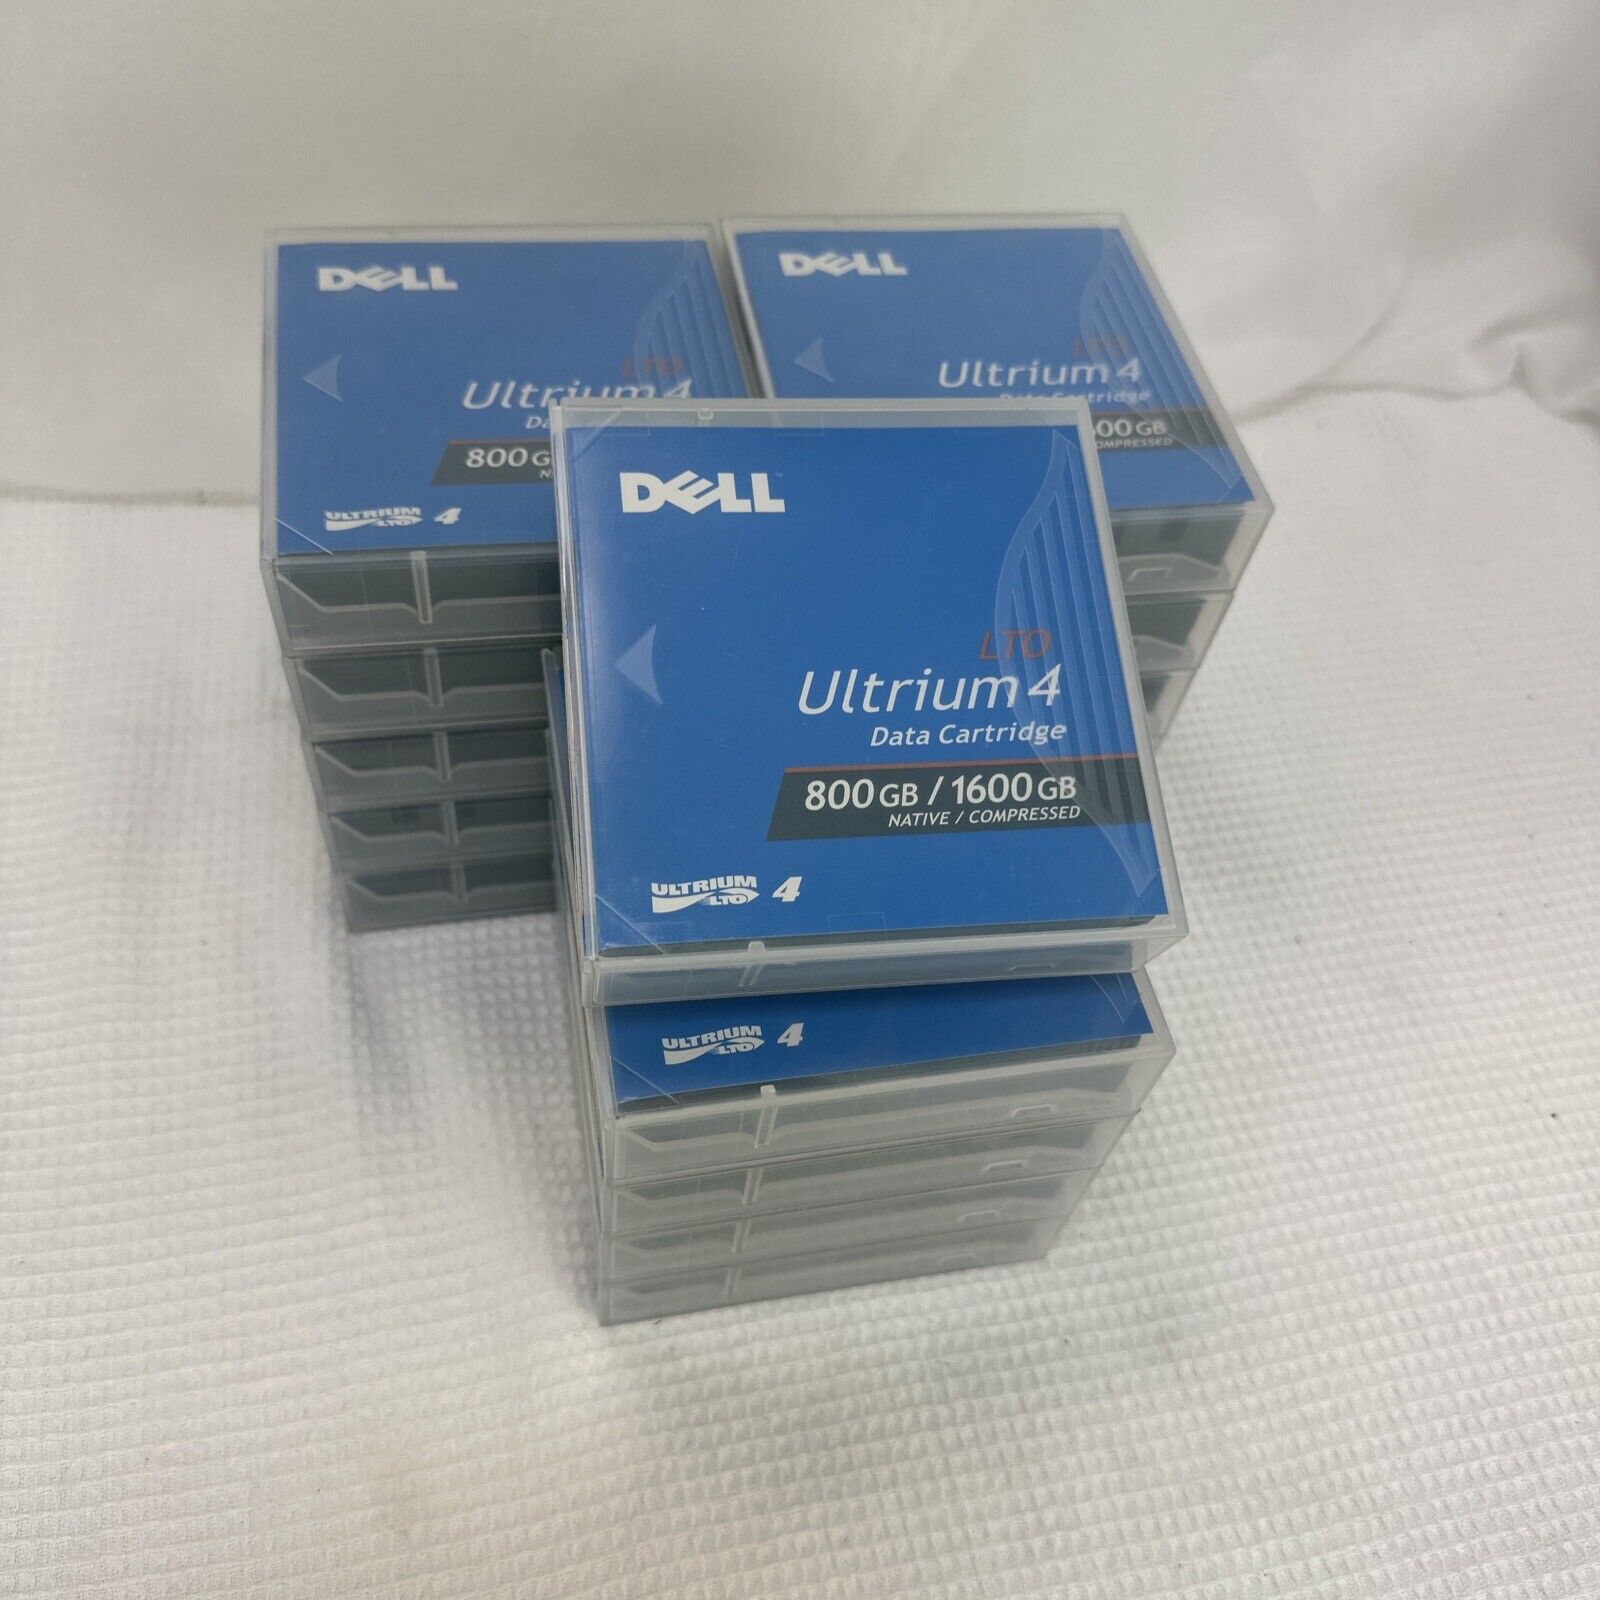 15x Dell LTO Ultrium 4 Data Cartridges 800GB/1600GB **Qty 15** Used, Data backup